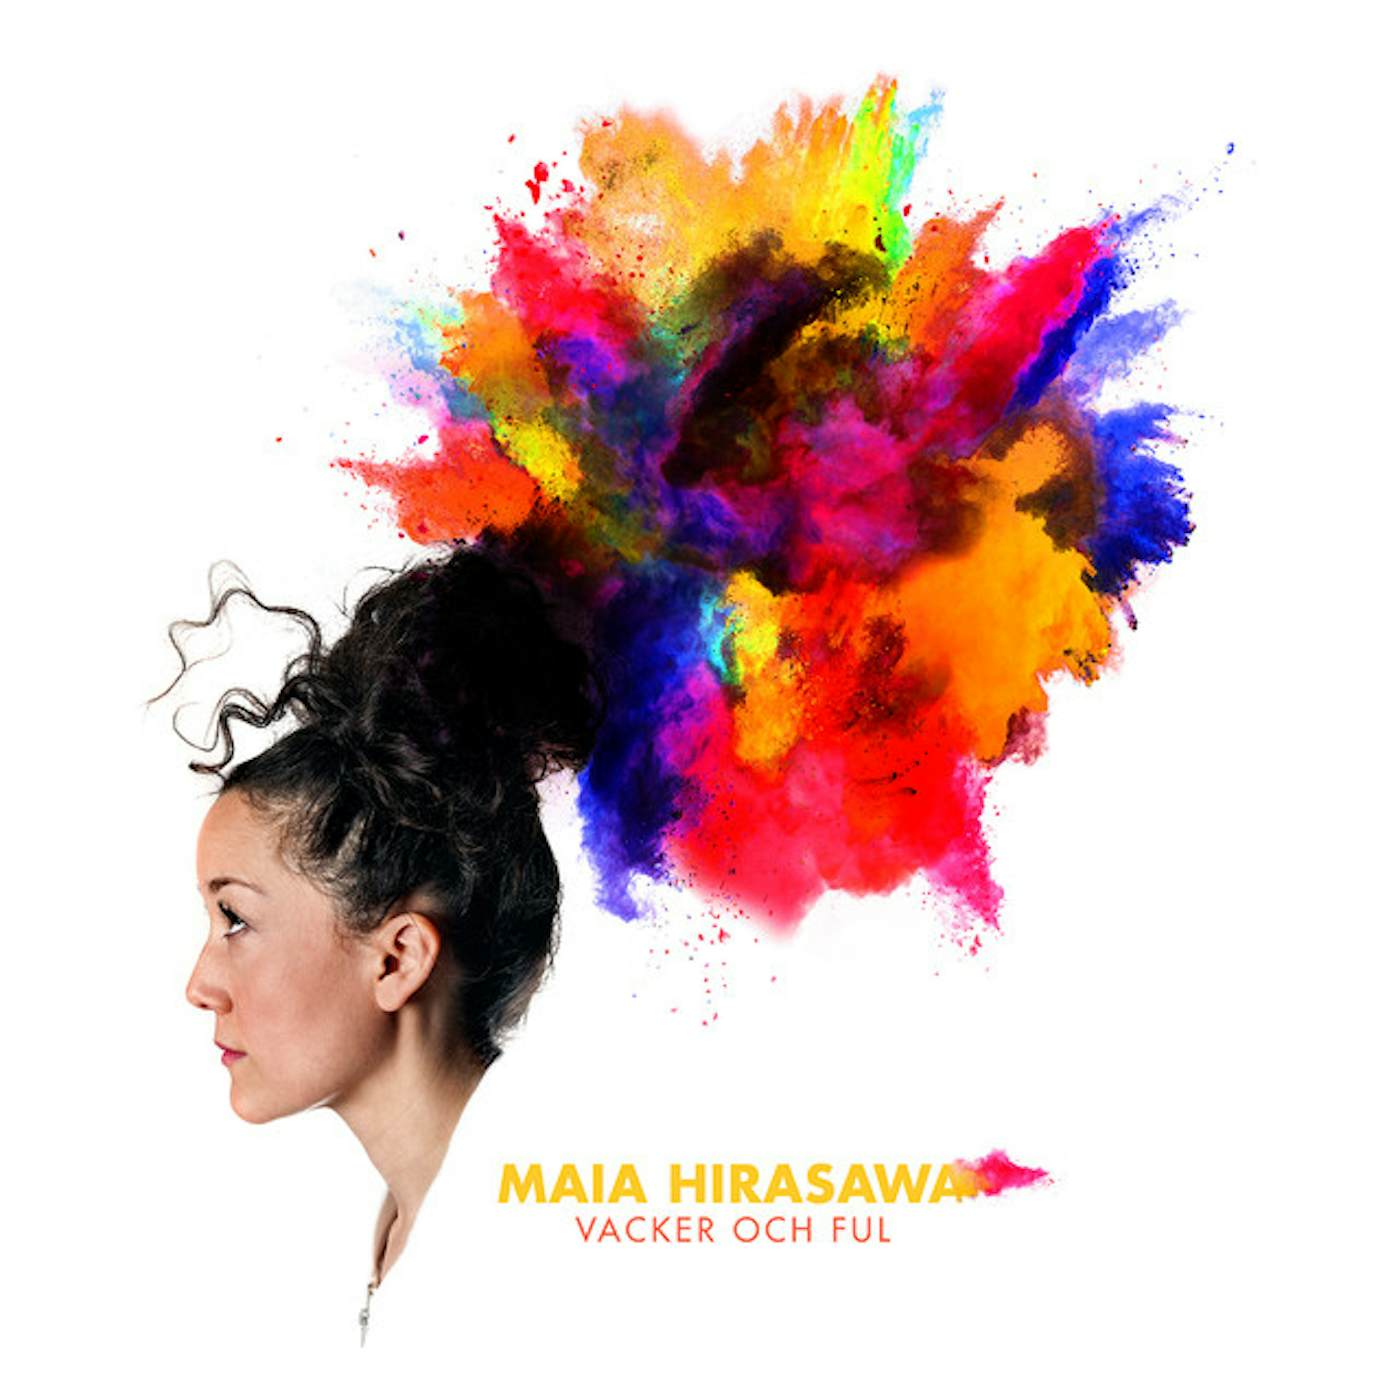 Maia Hirasawa Vacker och ful Vinyl Record